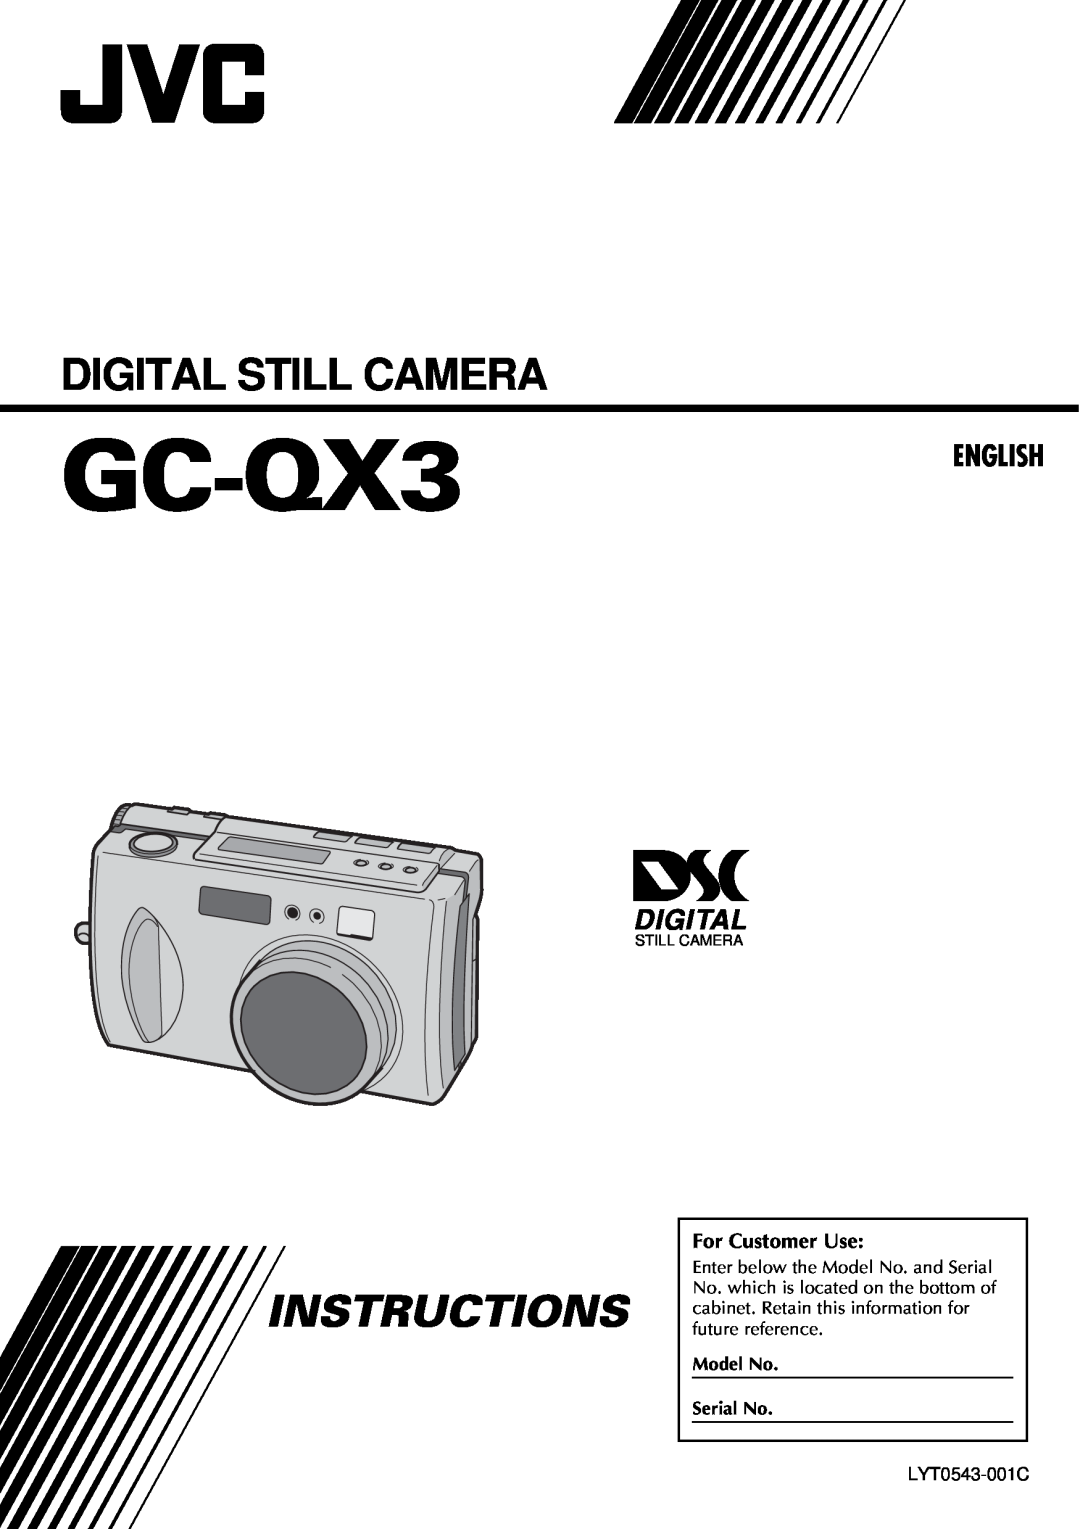 JVC GC-QX3 manual English, Digital Still Camera, Instructions, For Customer Use 